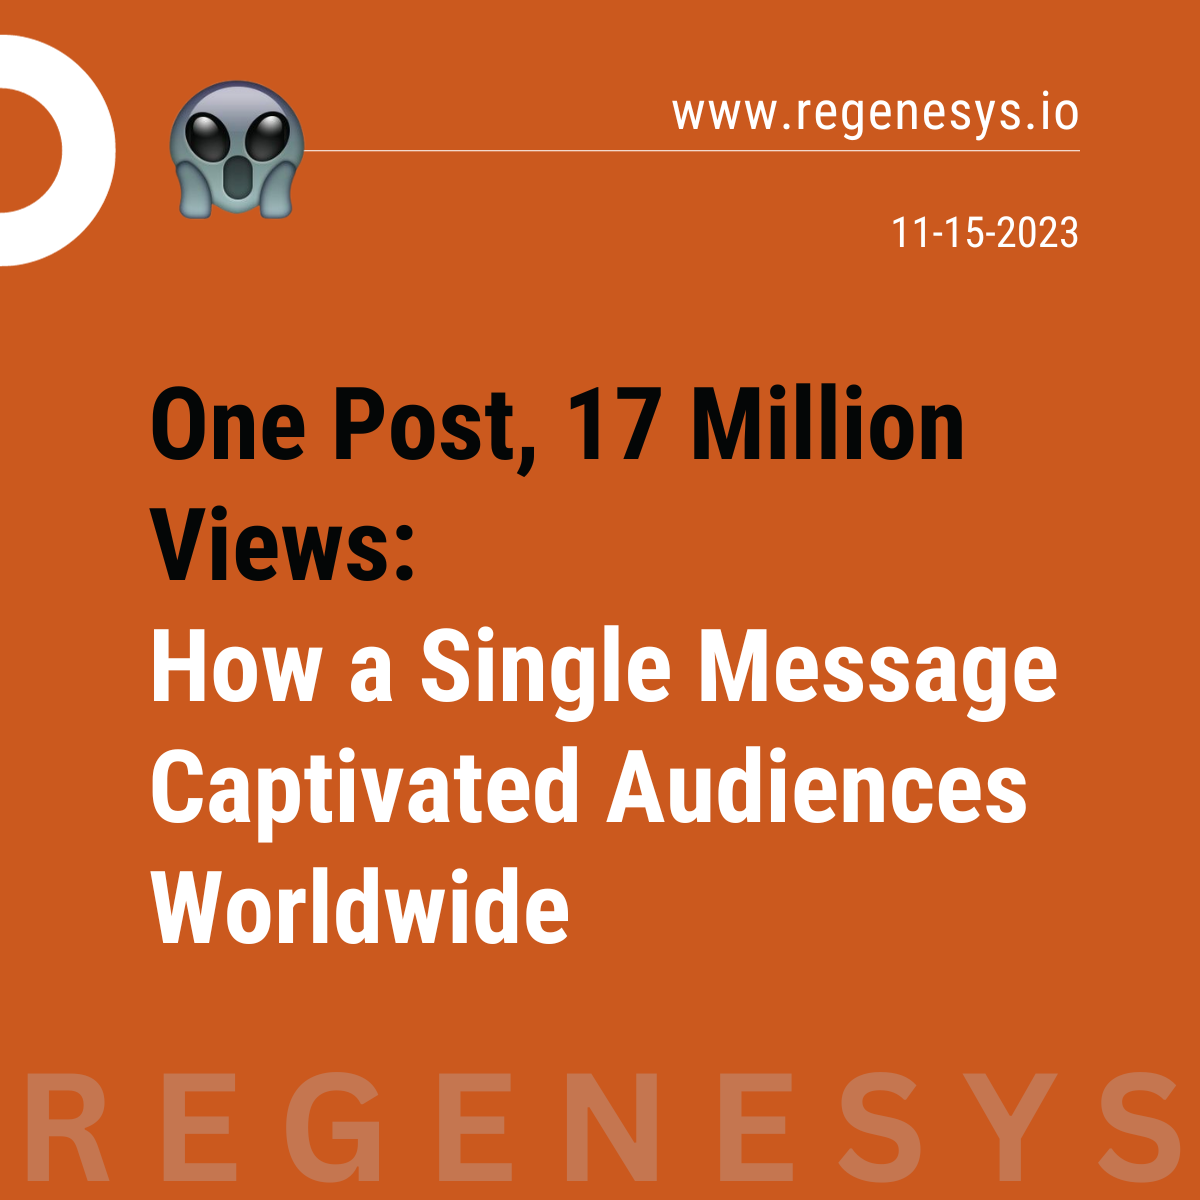 One post, 17 million impressions